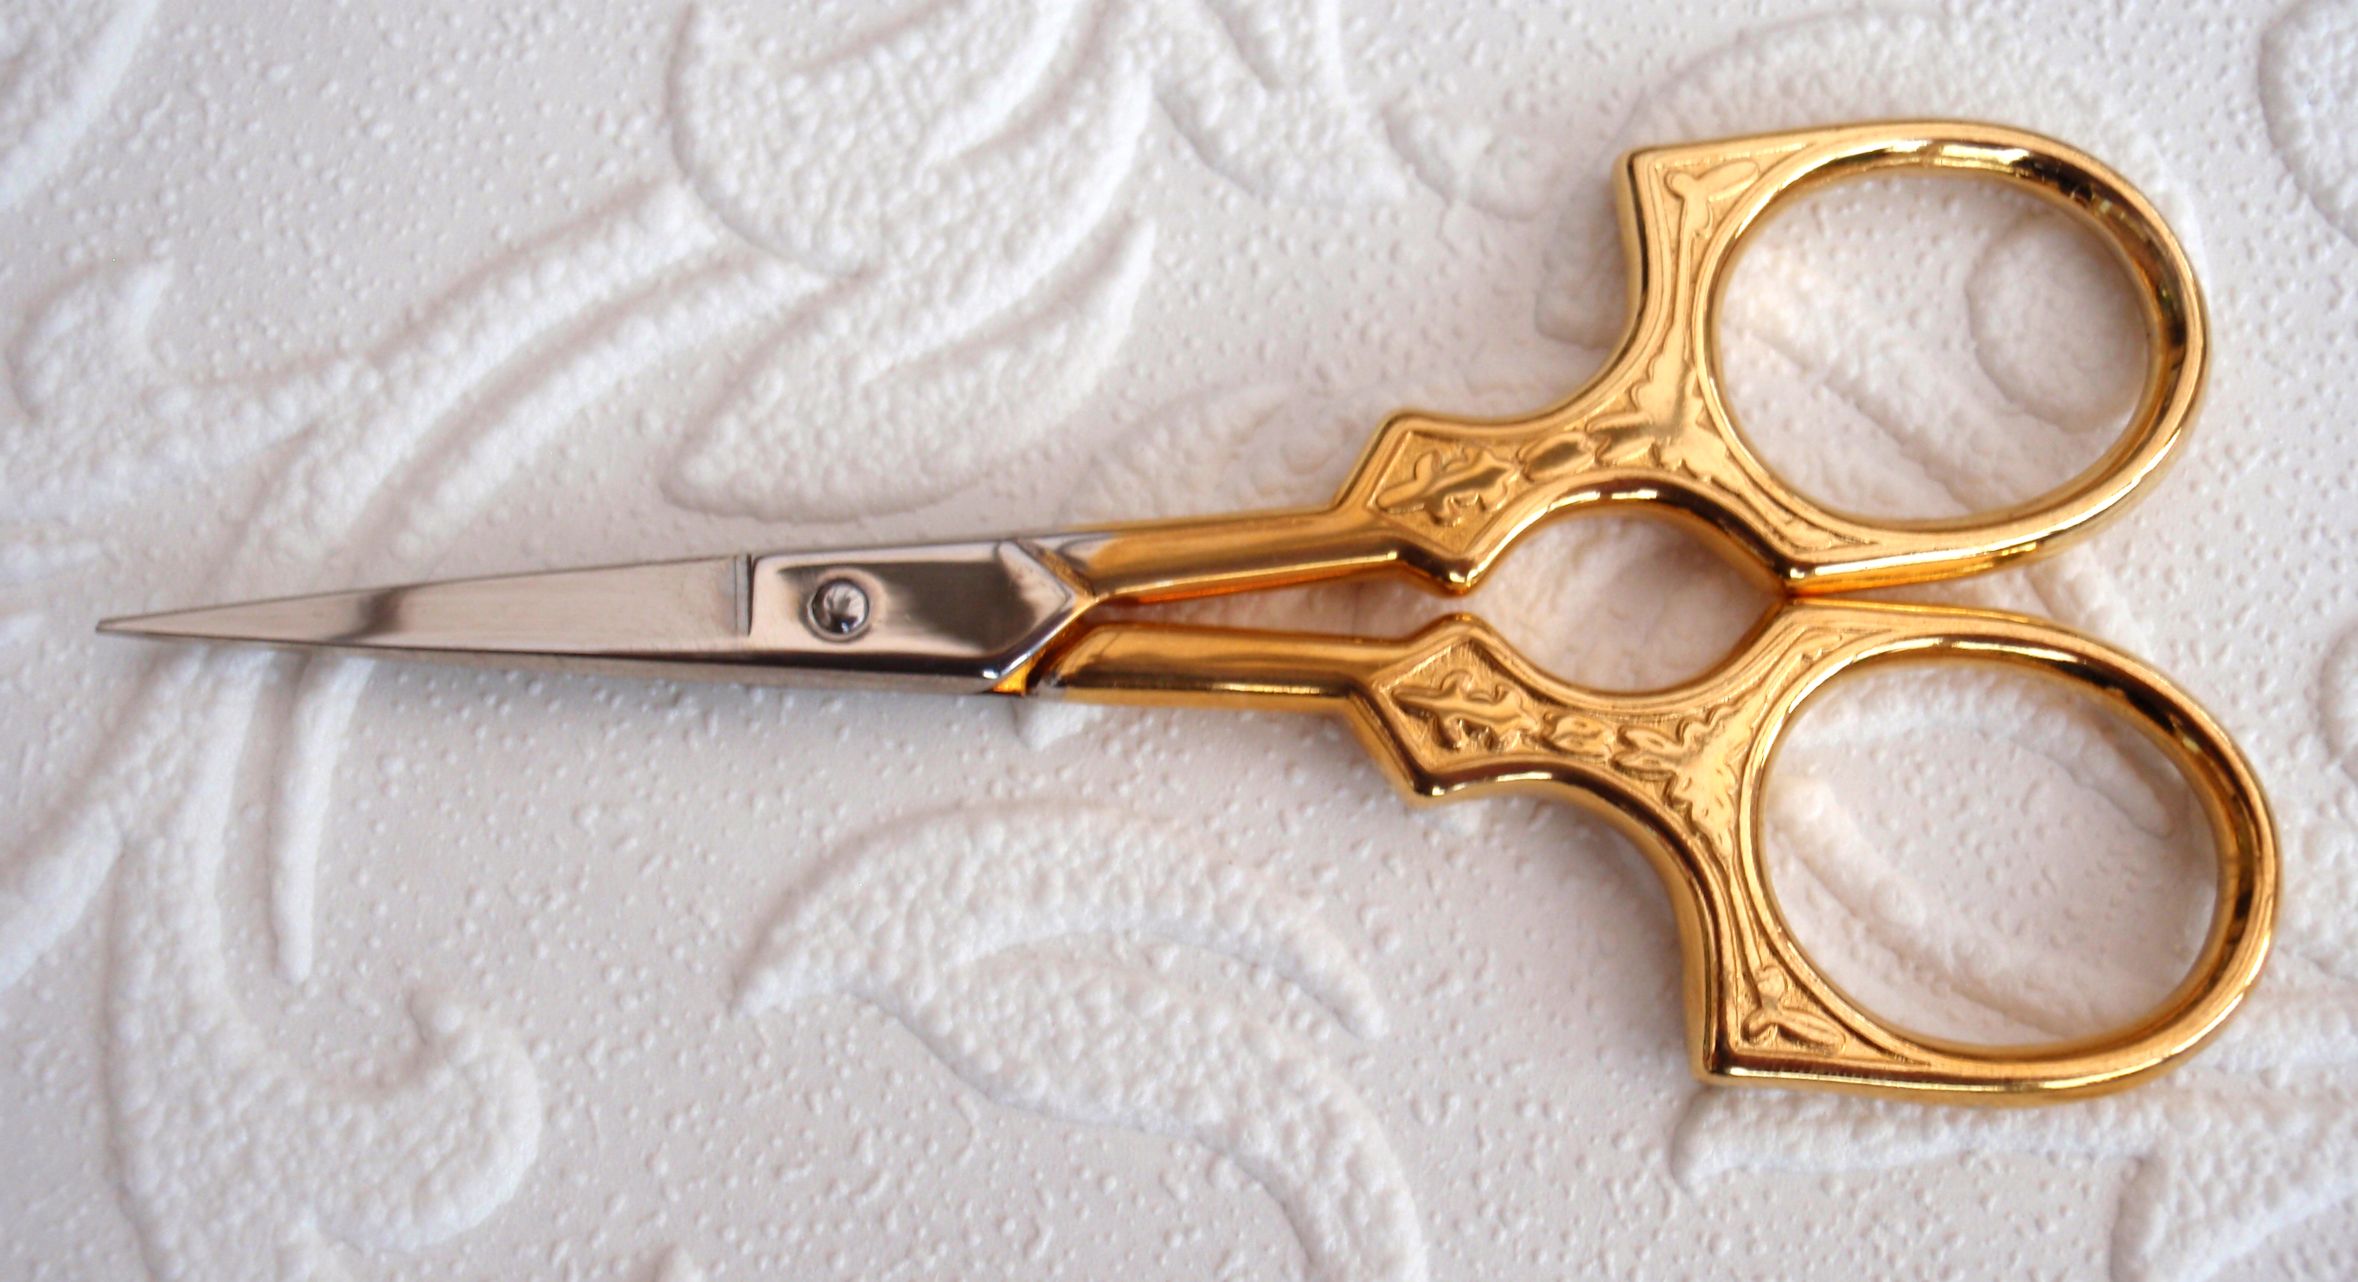  Embroidery  Fleur Scissors : Gold : ss 